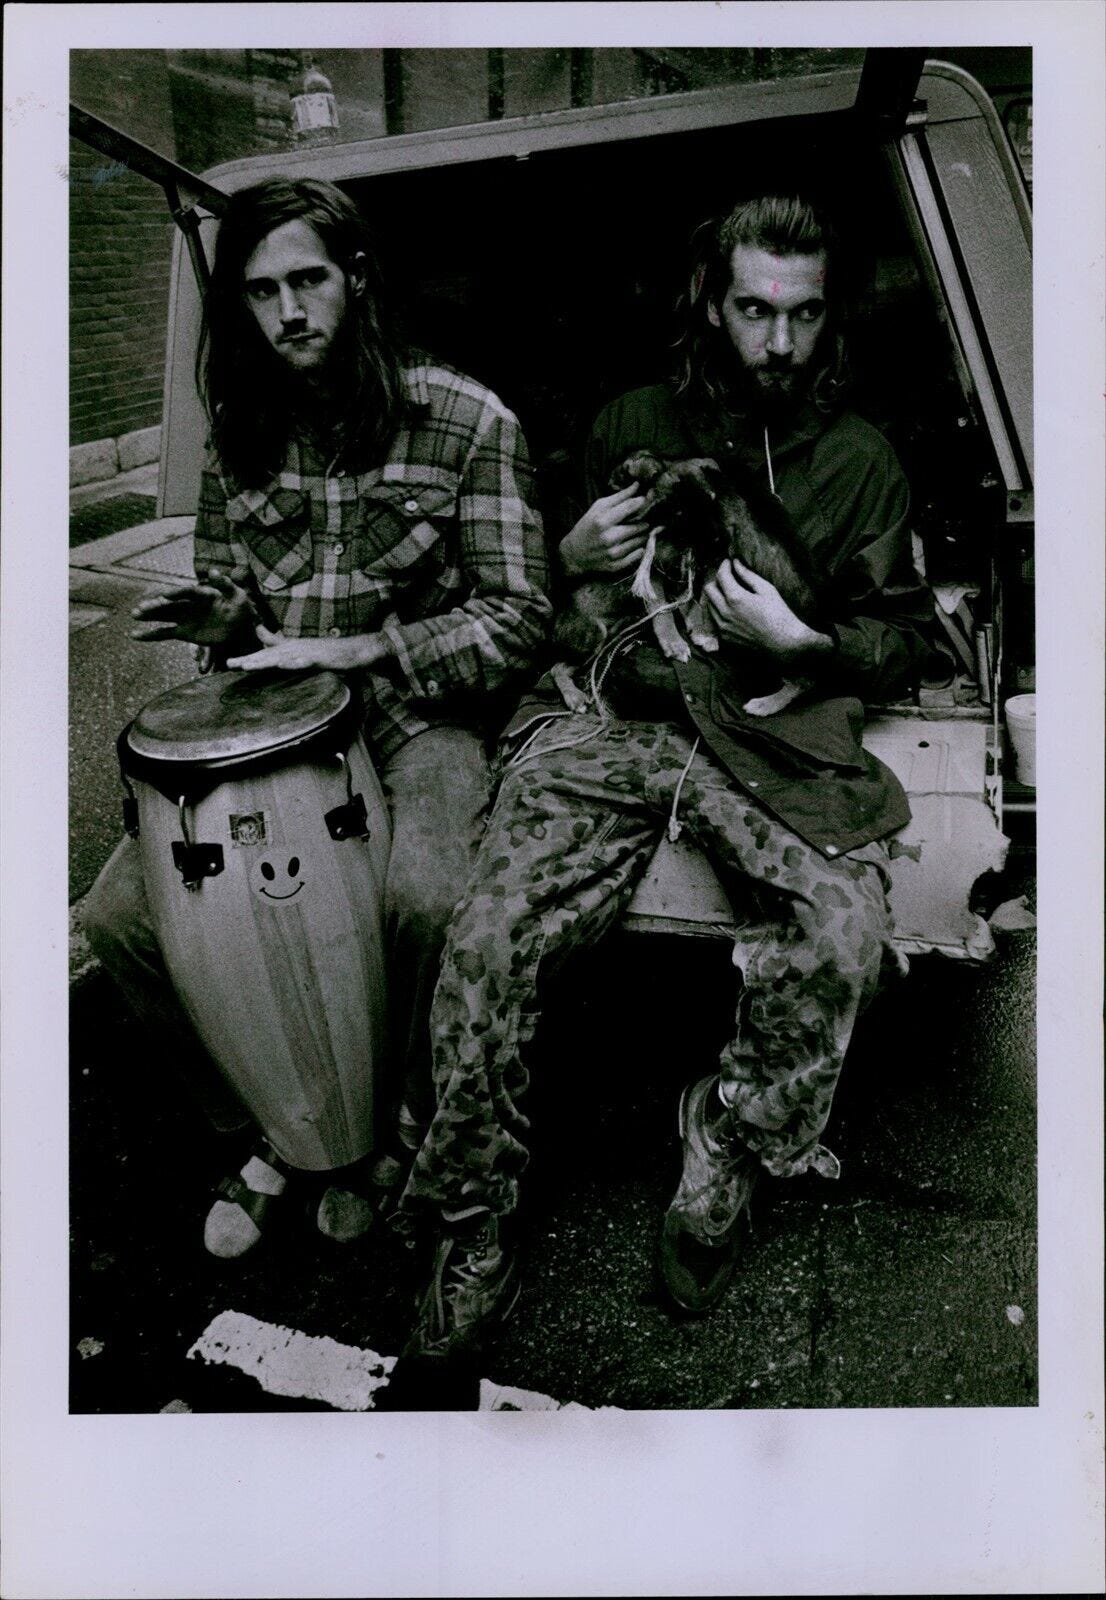 LG843 1991 Orig Arthur Pollock Photo DEADHEADS GATHERING Boston Garden Hippies - Picture 1 of 2